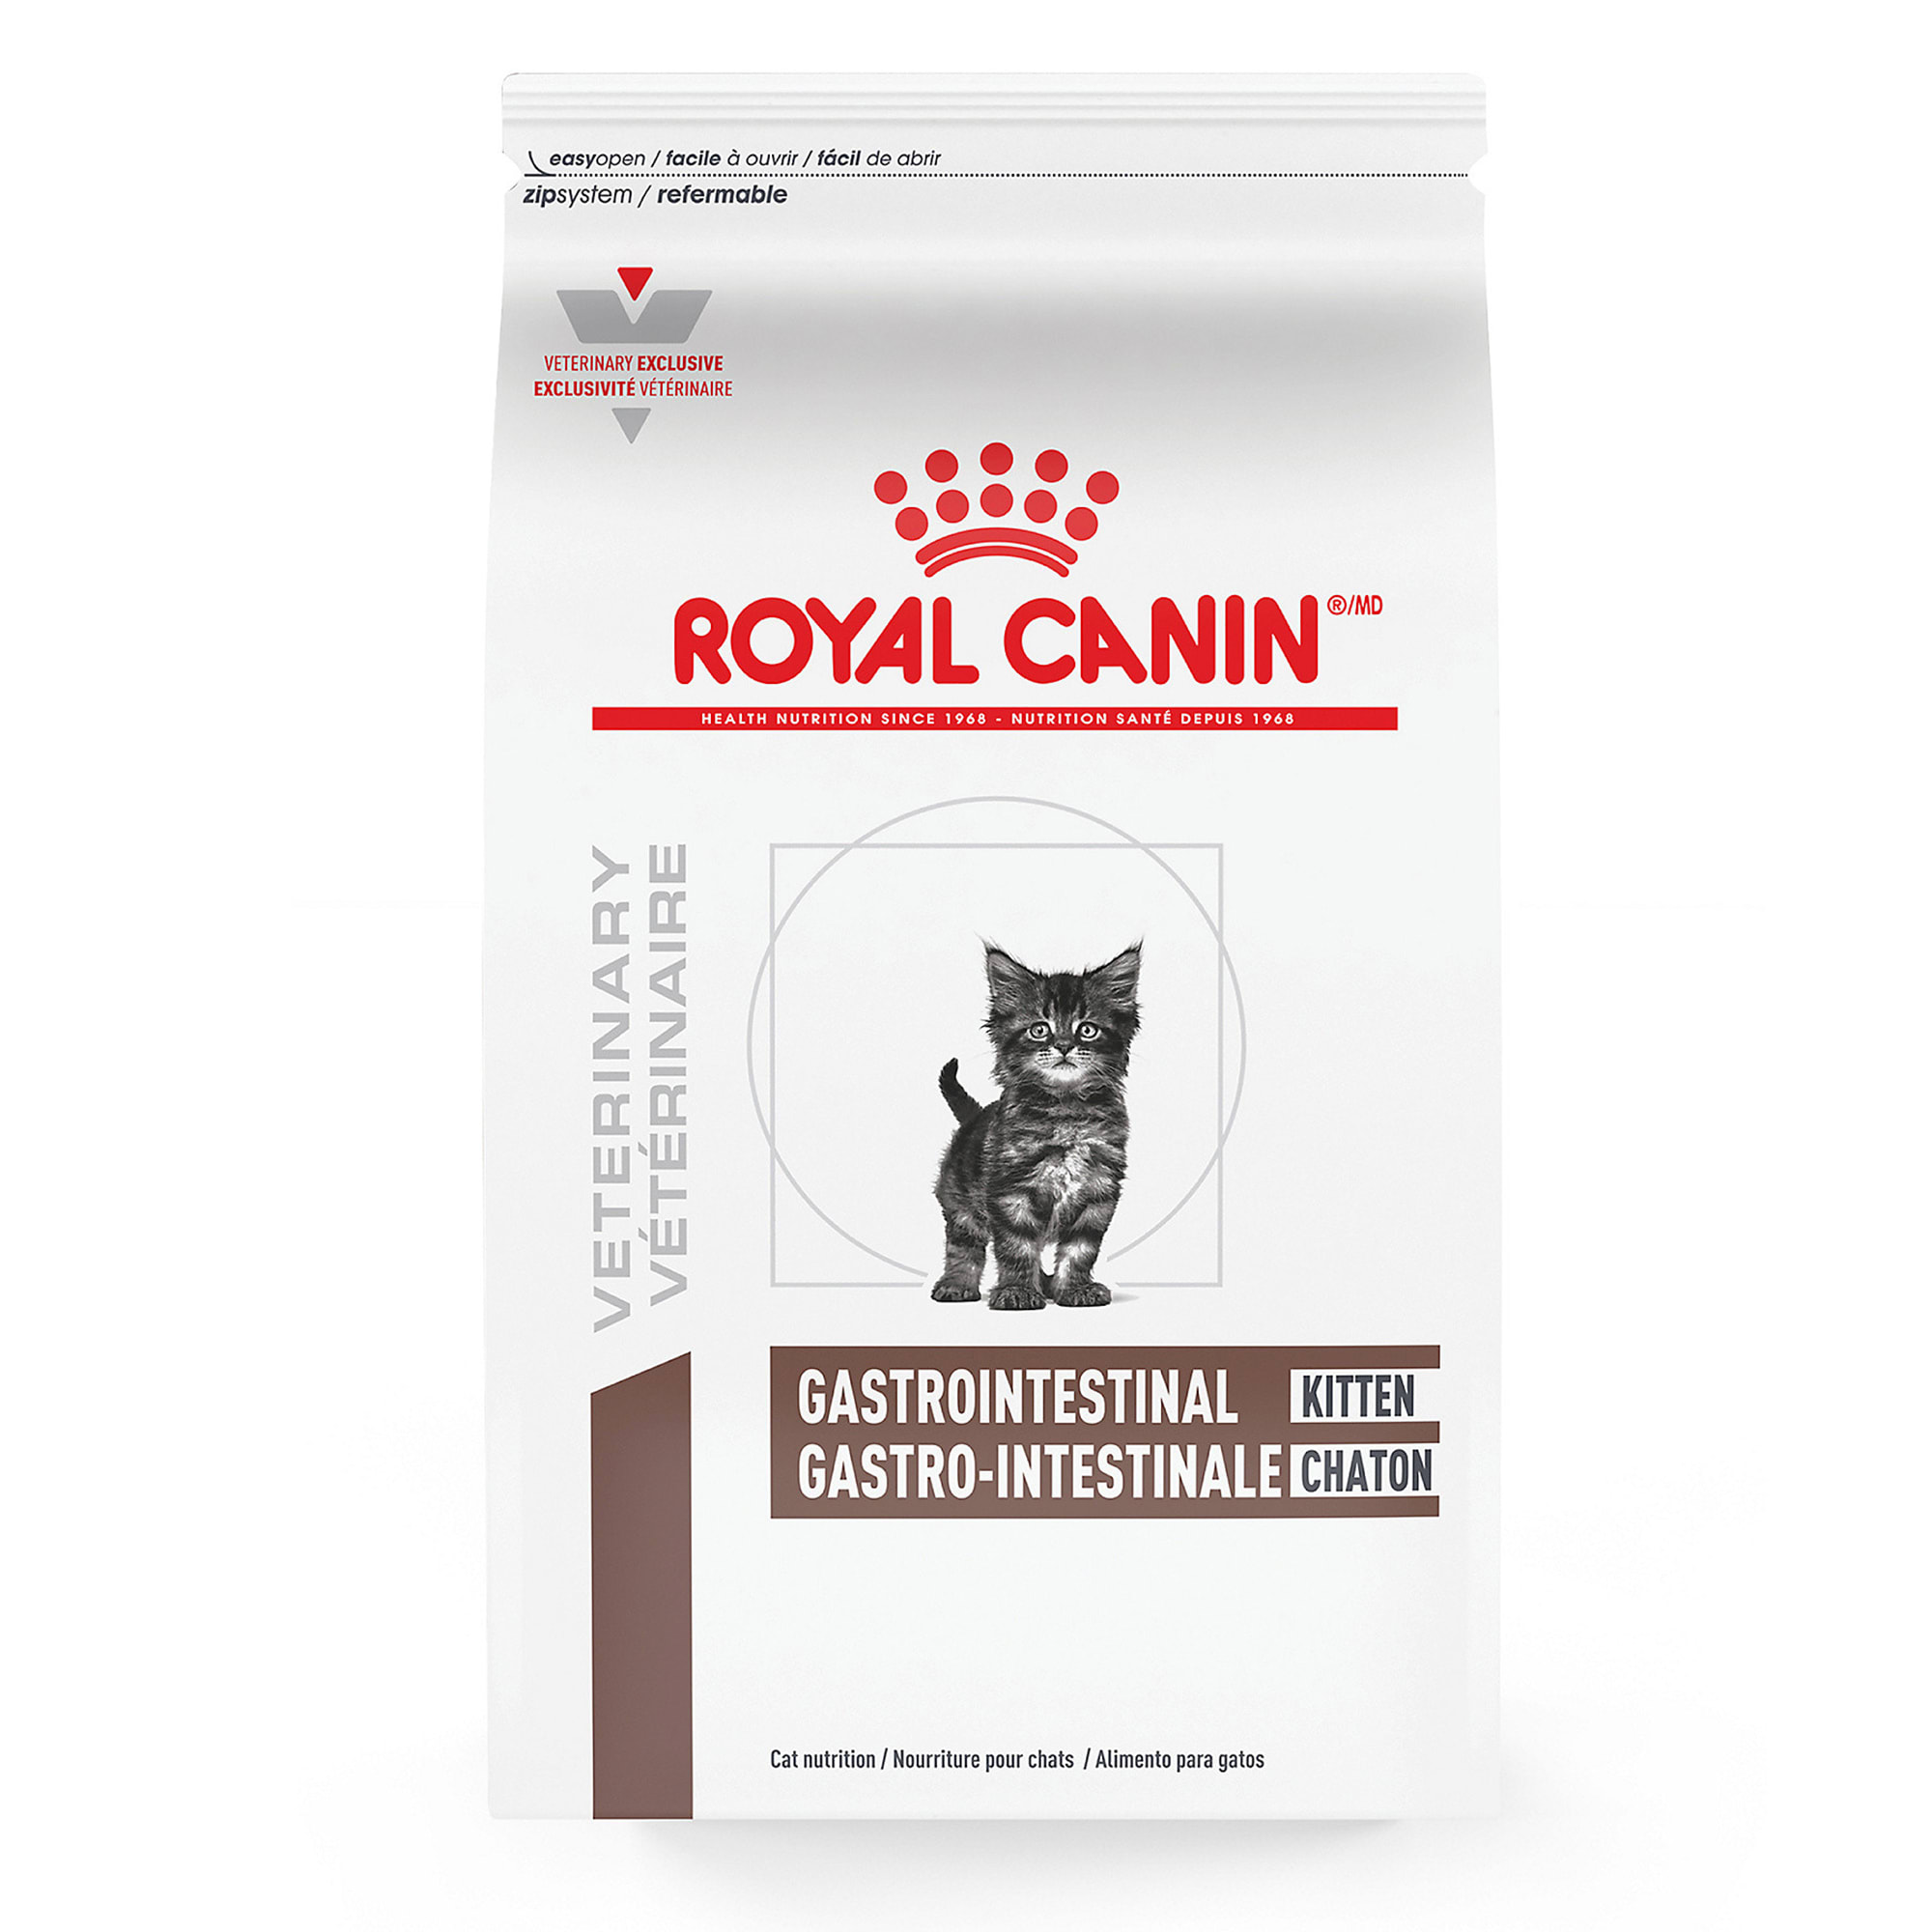 royal canin gastro intestinal gi32 feline